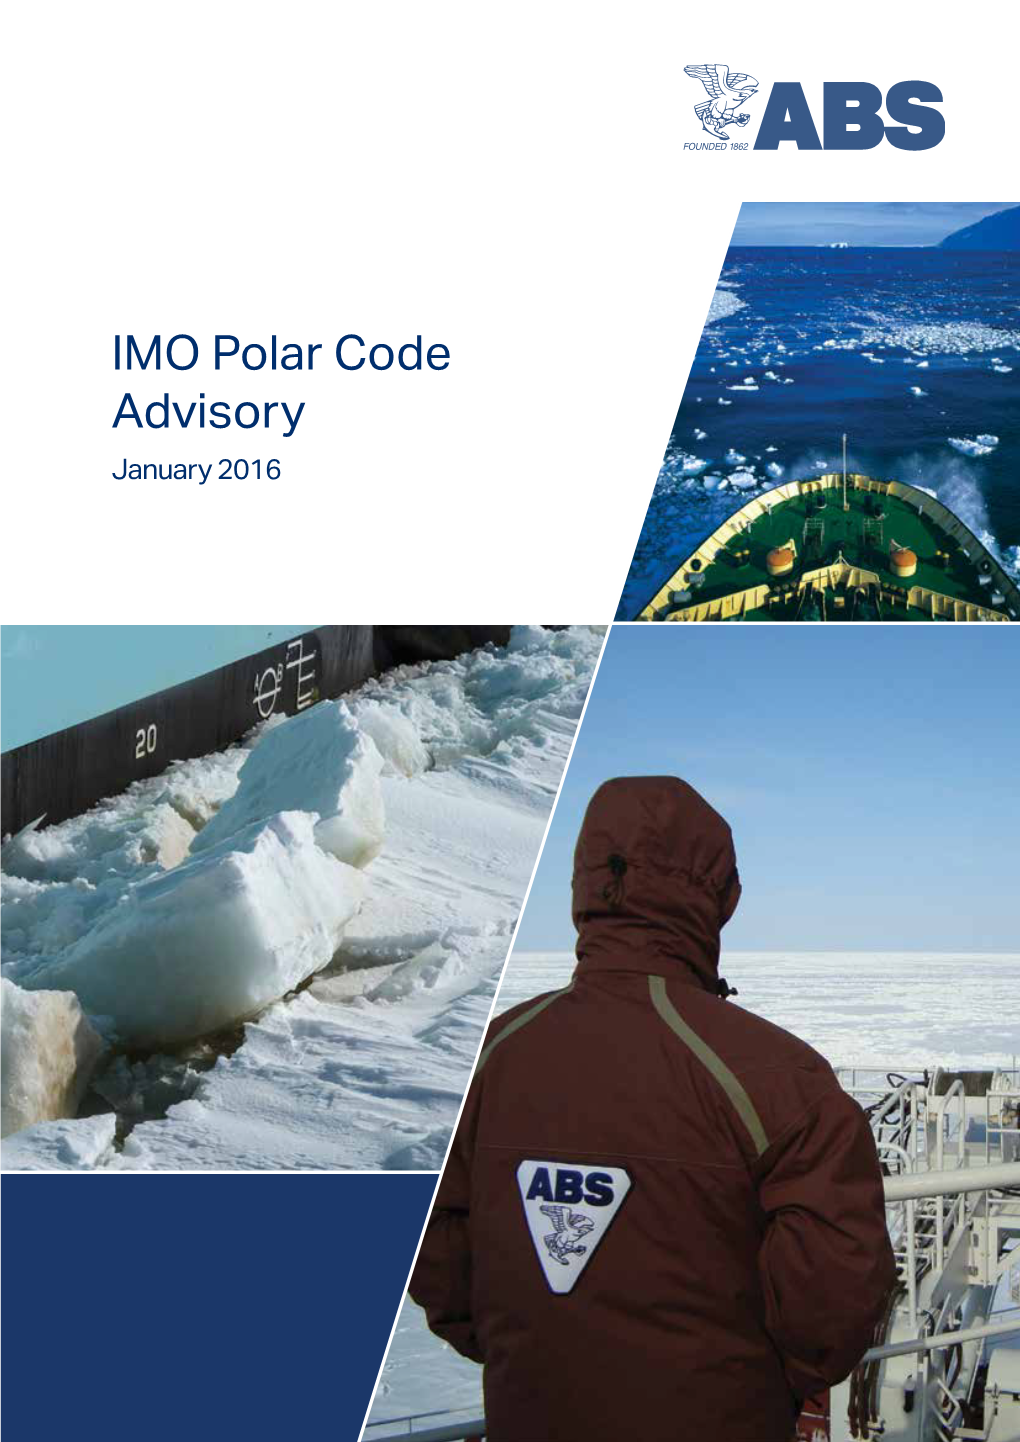 ABS Advisory on the IMO Polar Code